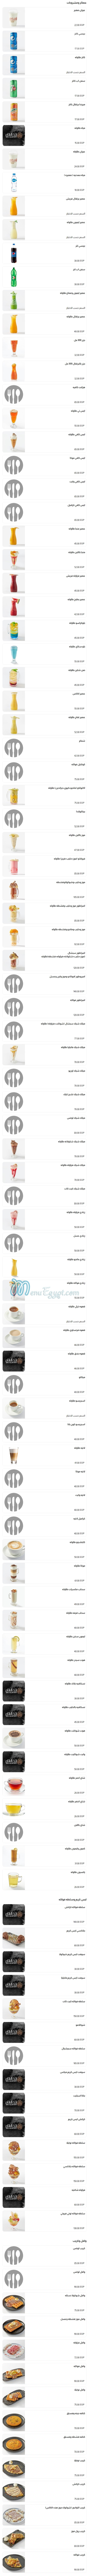 Batta Balady menu Egypt 8